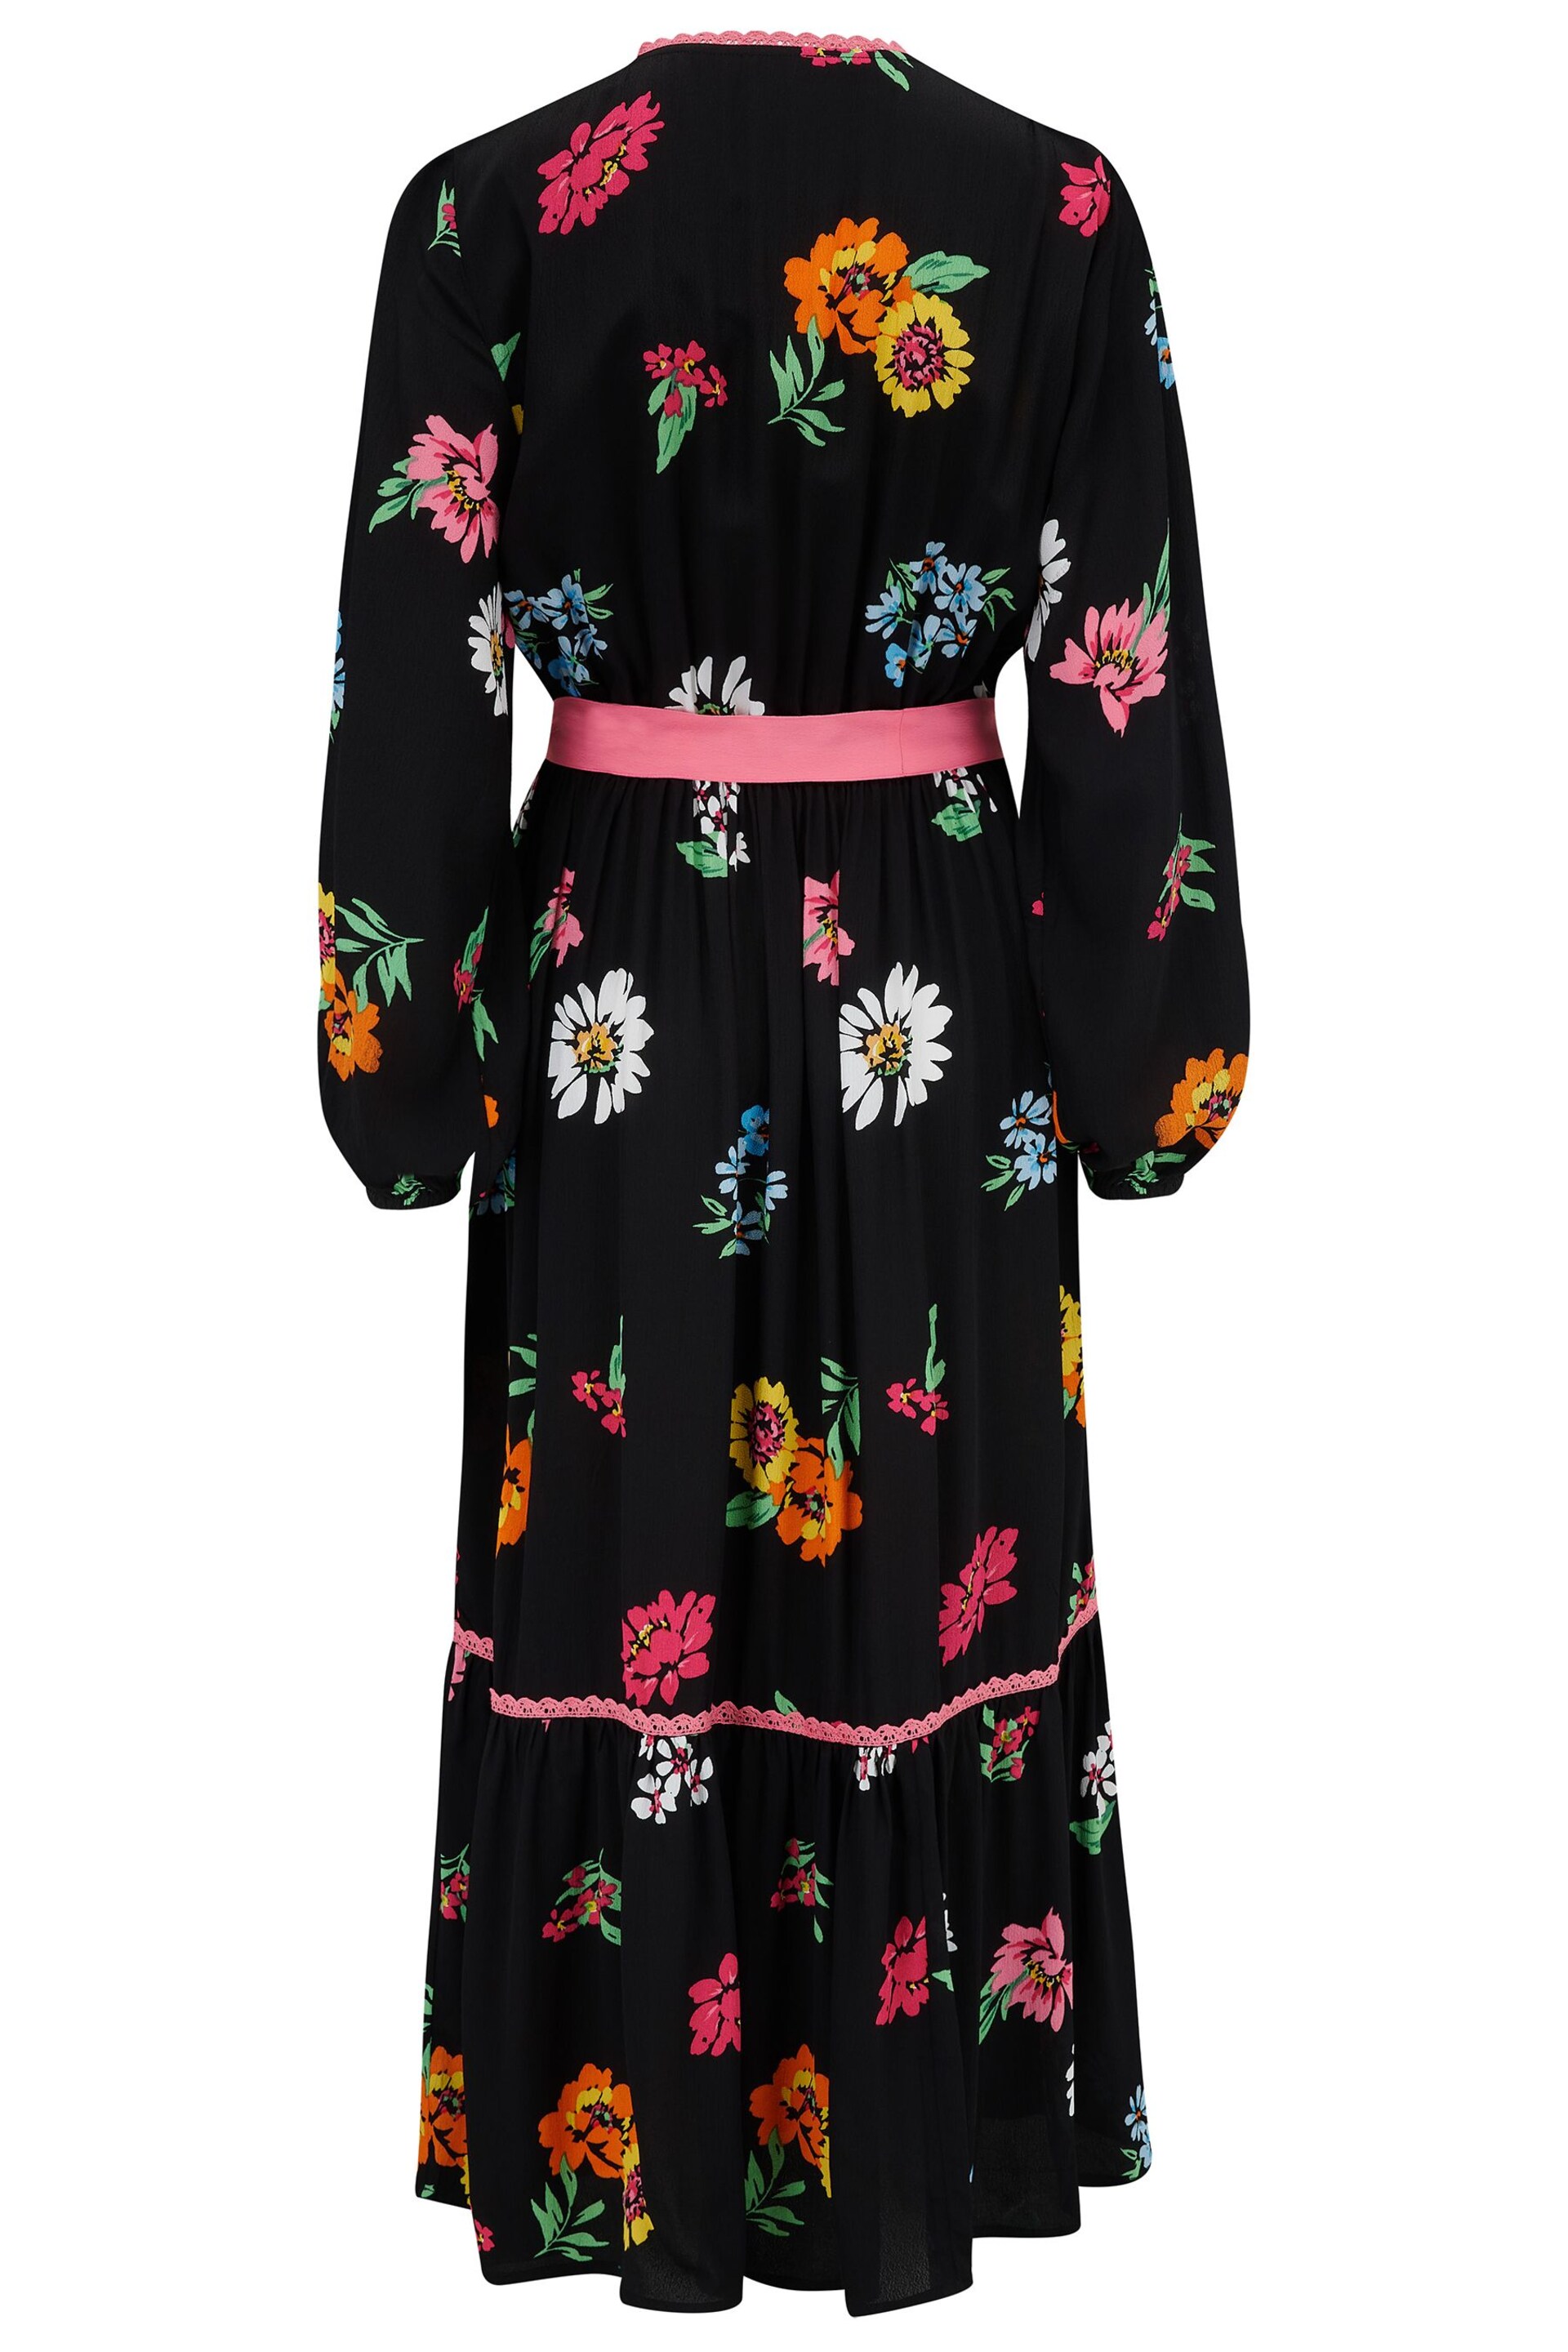 Pour Moi Black Floral Amara Wrap Front Tiered Woven Midi Dress - Image 5 of 5